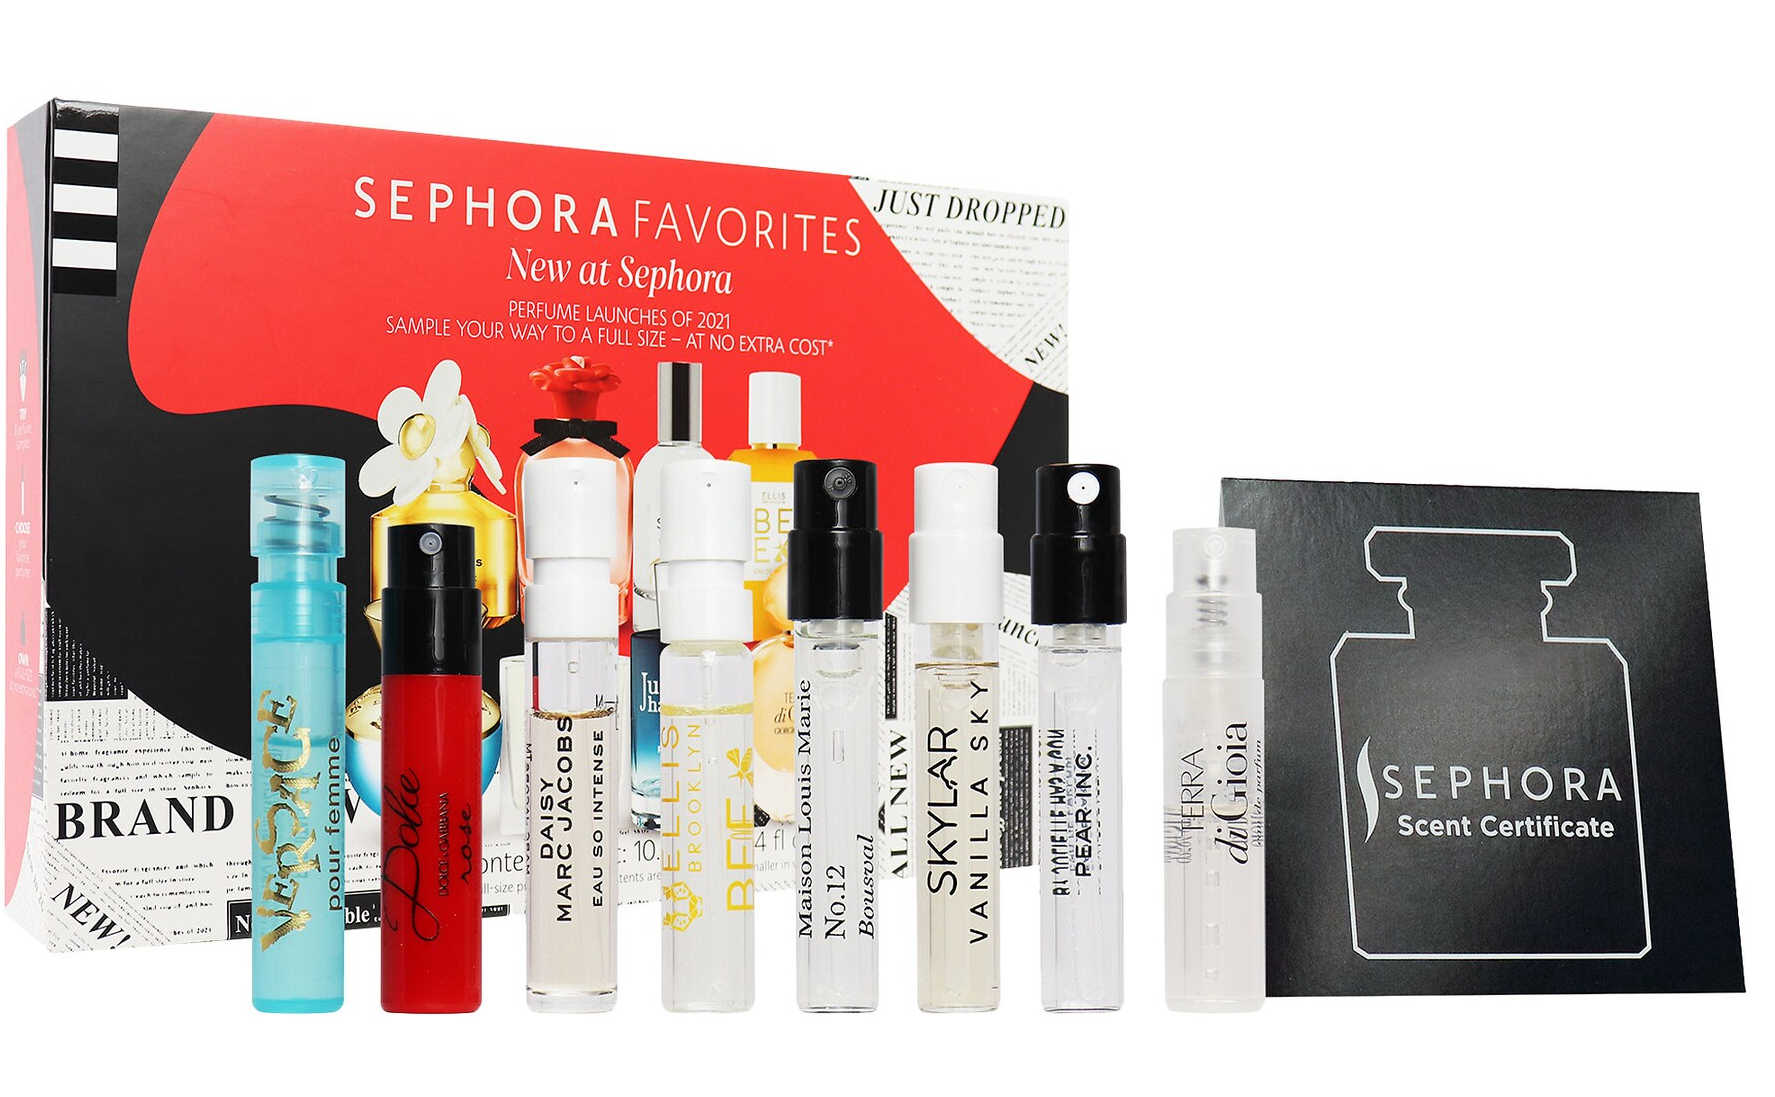 Sephora Favorites Best of Vanilla Perfume Sampler Set with Certificate